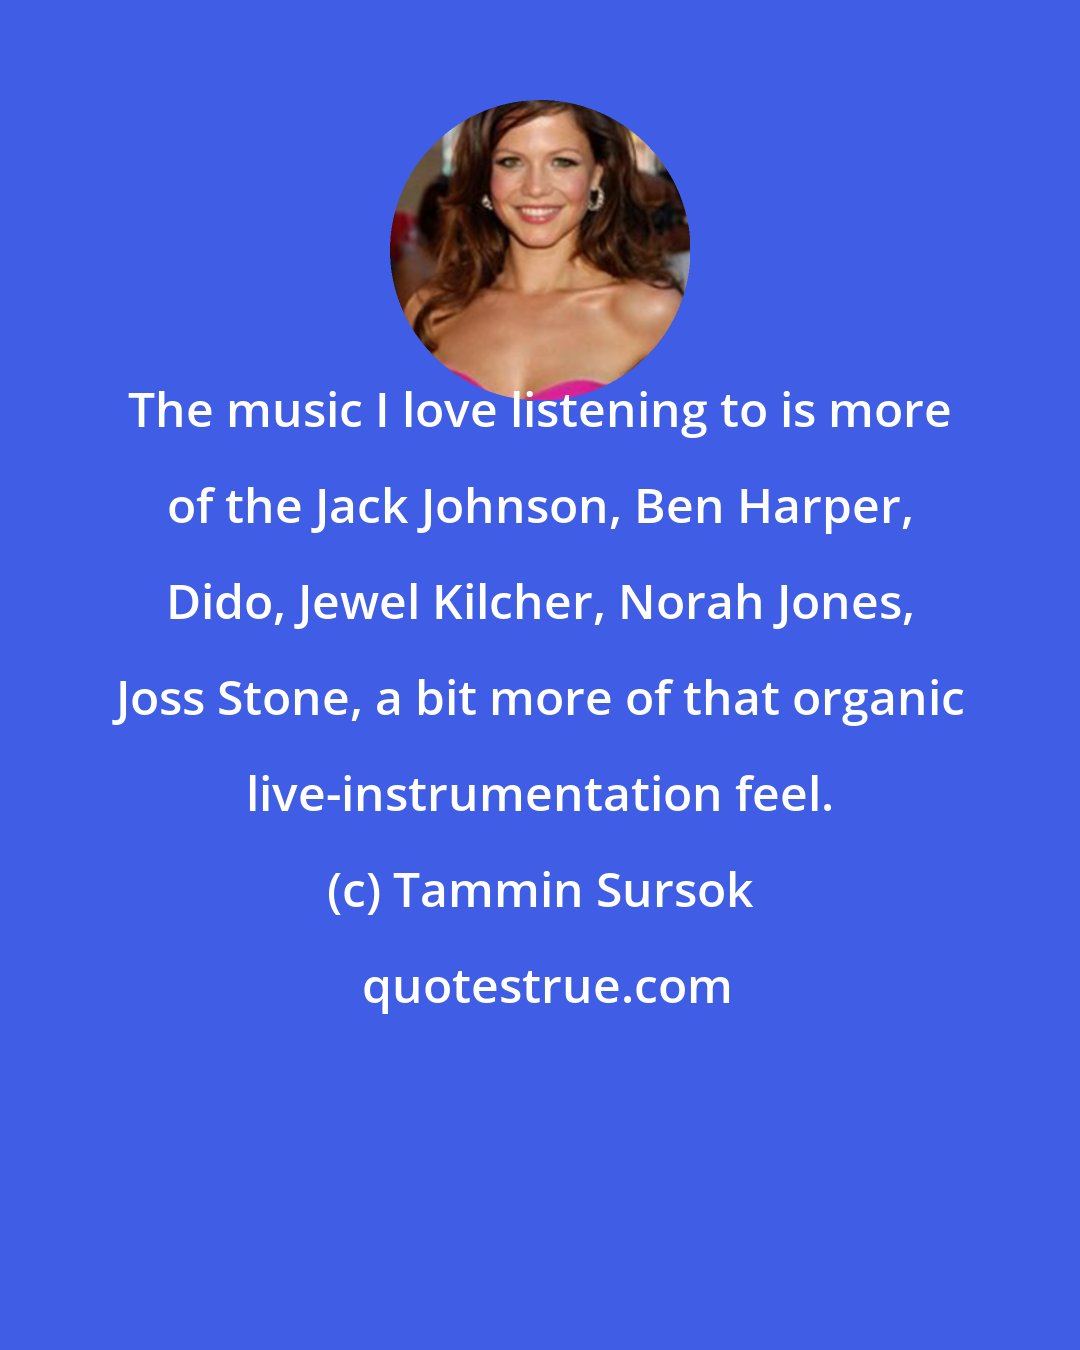 Tammin Sursok: The music I love listening to is more of the Jack Johnson, Ben Harper, Dido, Jewel Kilcher, Norah Jones, Joss Stone, a bit more of that organic live-instrumentation feel.